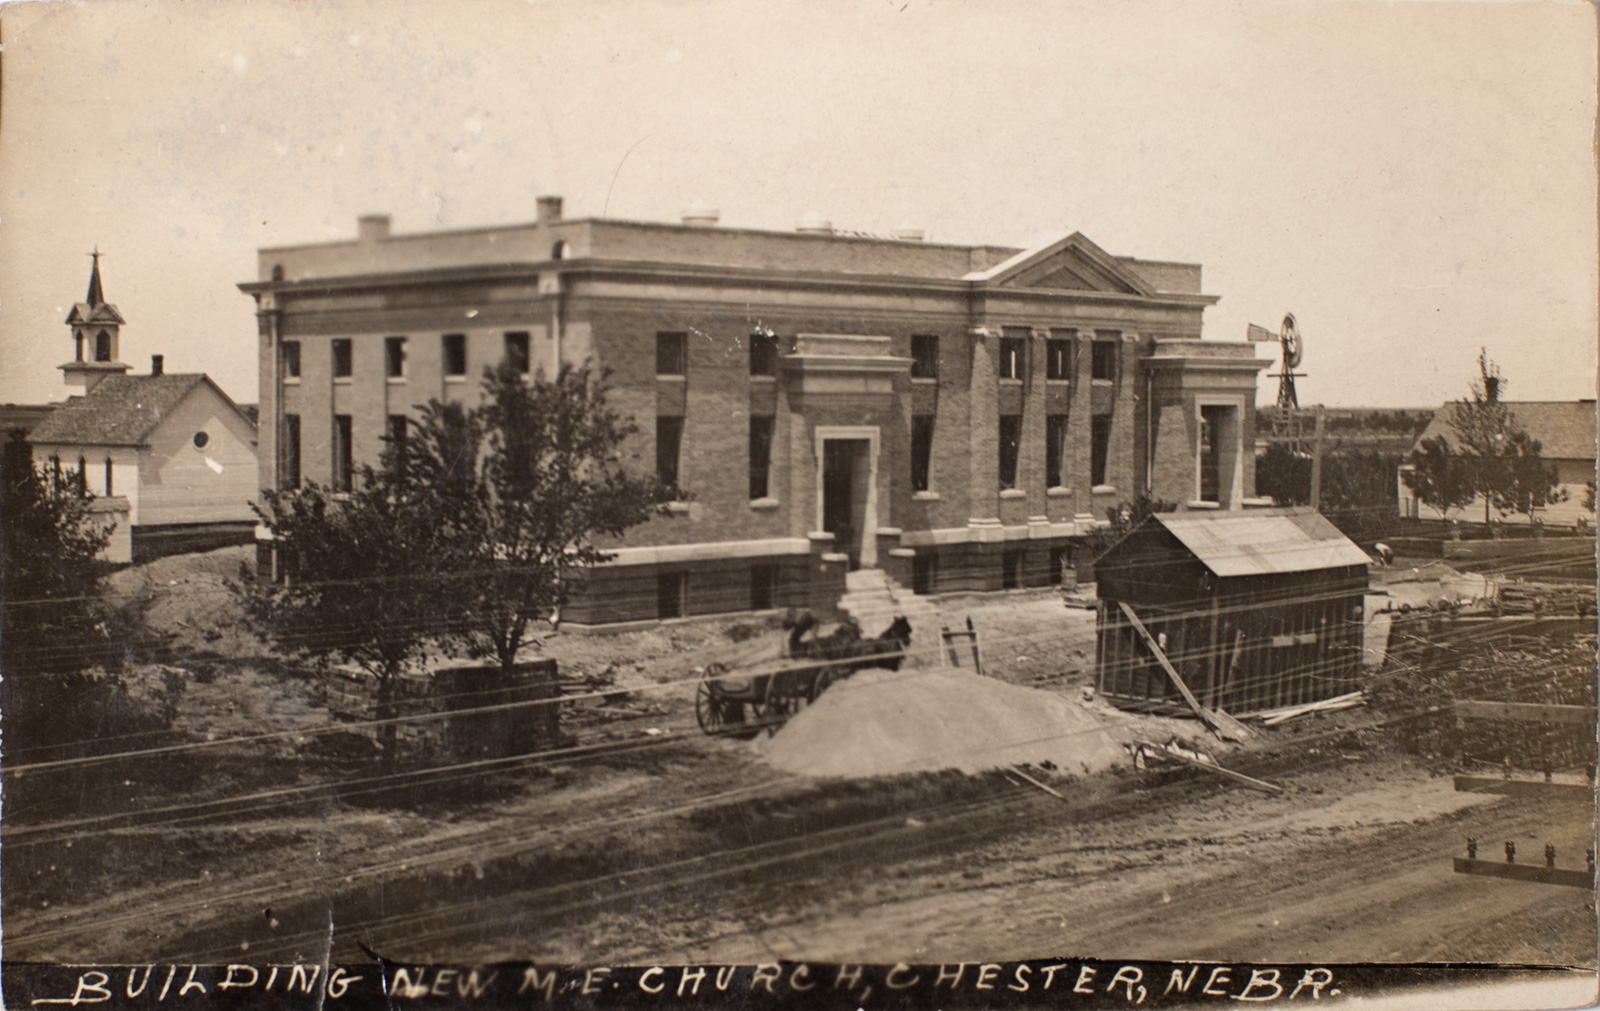 Building the Methodist Church in Chester Nebraska - 1910-image